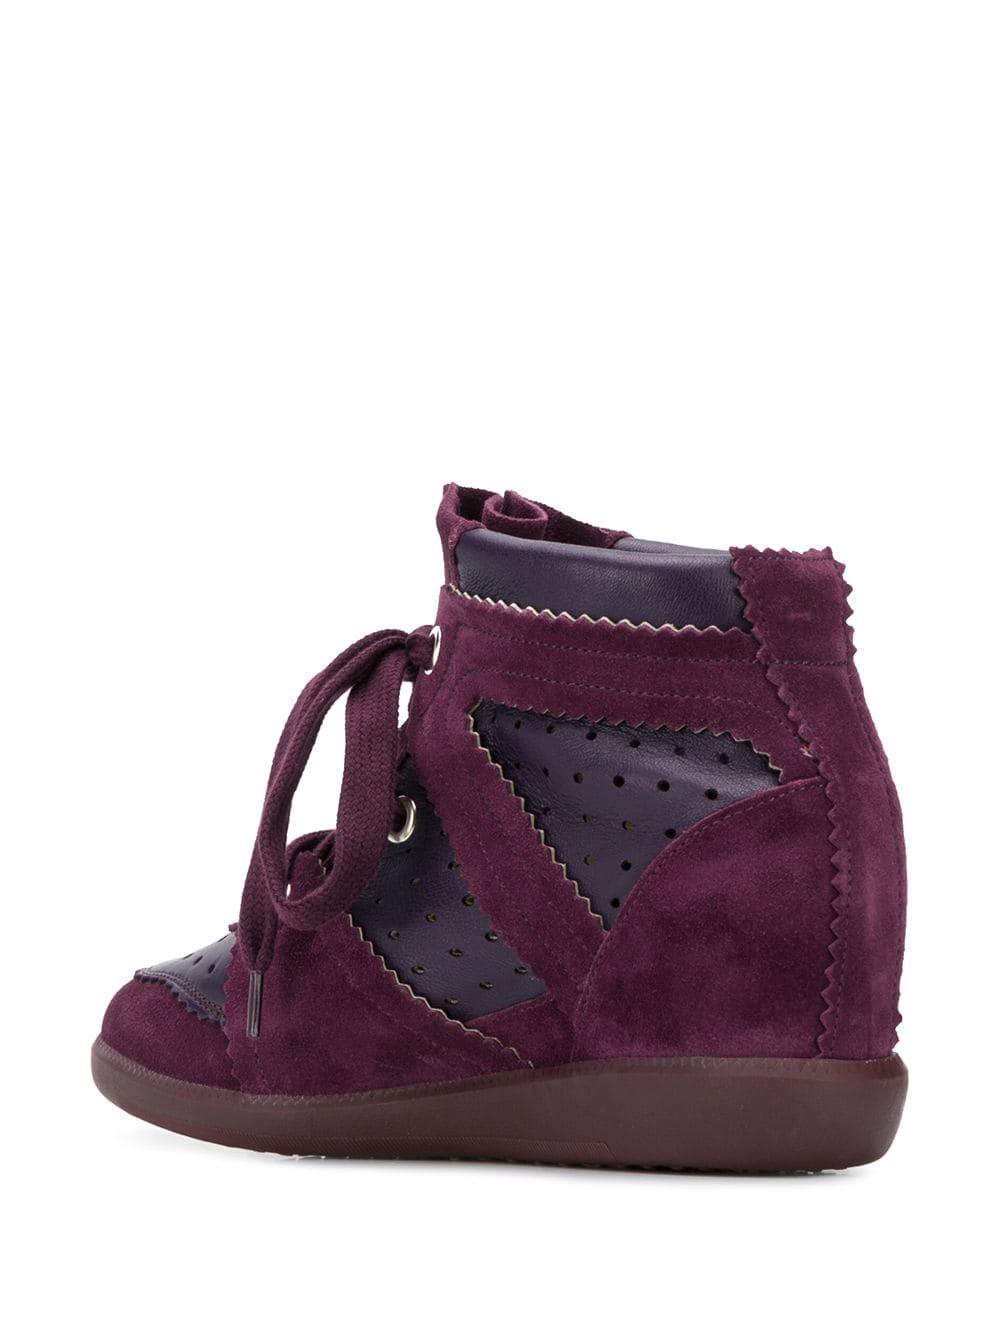 Isabel Marant Suede Bobby Wedge Sneakers in Purple - Lyst